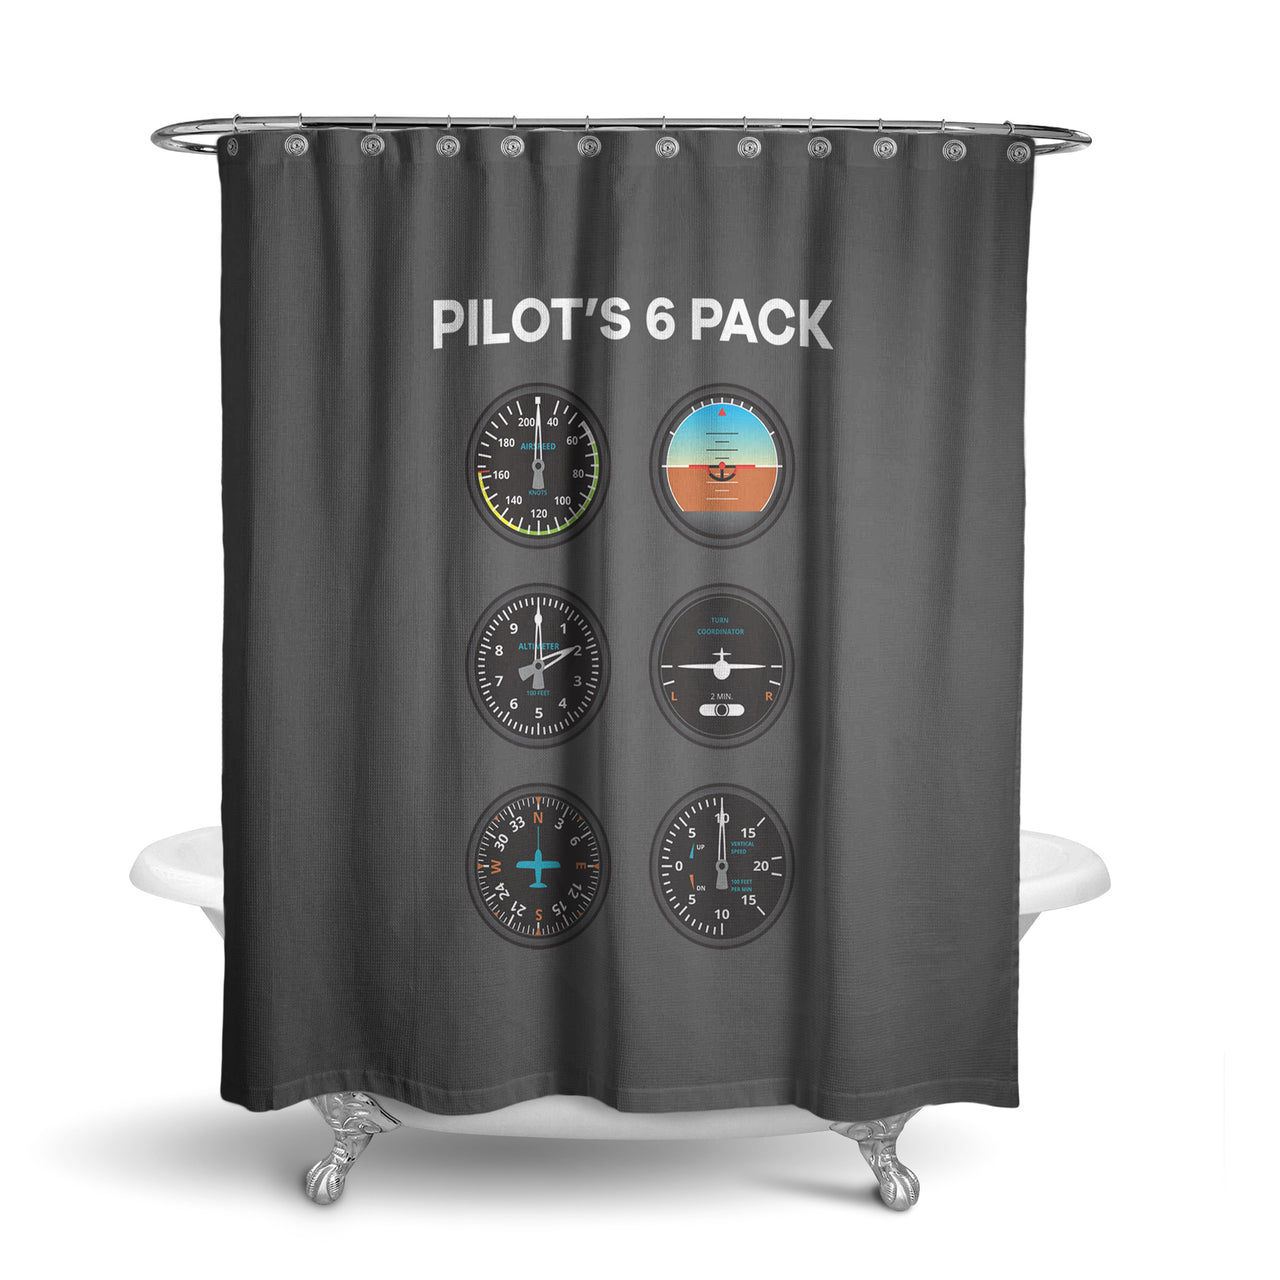 Pilot's 6 Pack Designed Shower Curtains